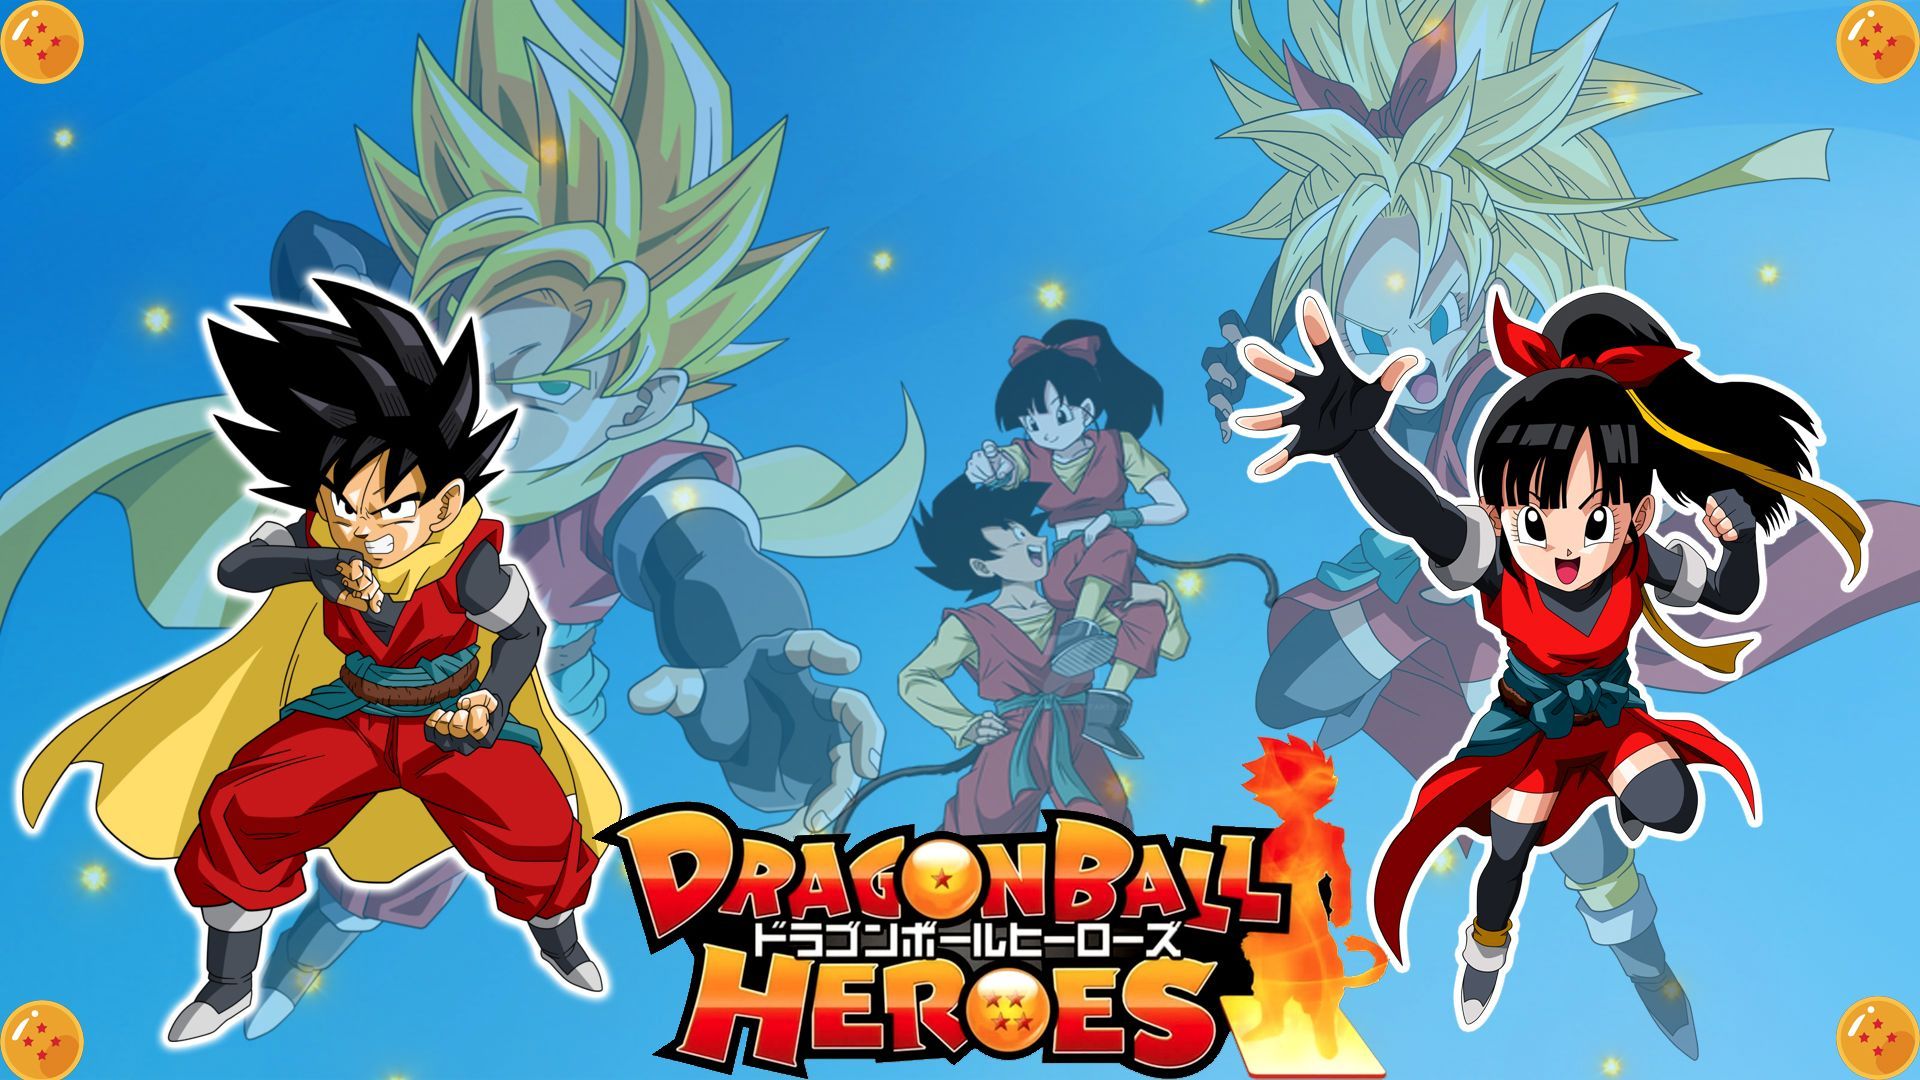 Anime Dragon Ball Super: Super Hero HD Wallpaper by んーけ